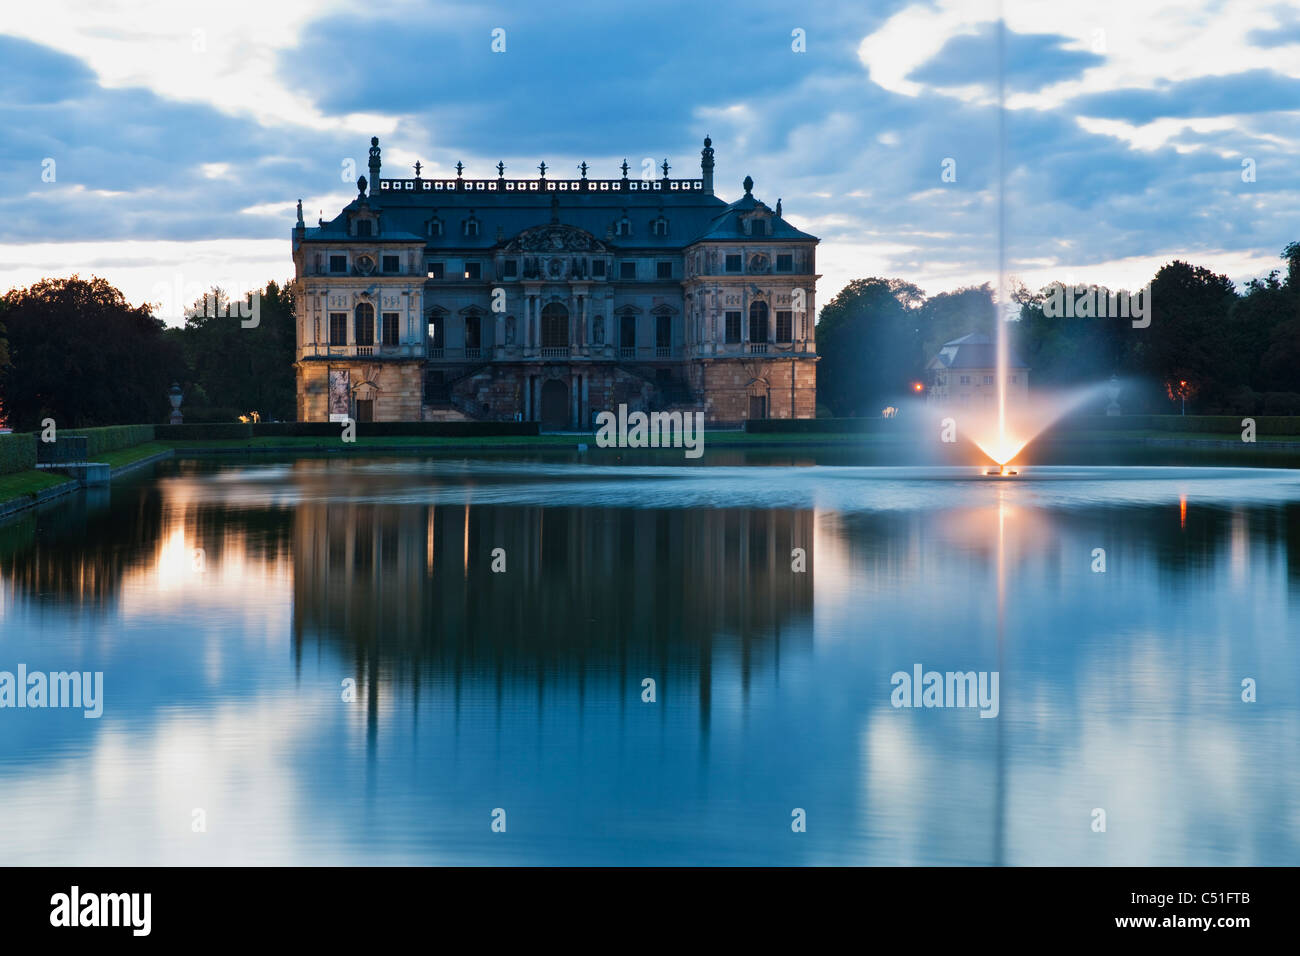 Palais im Großen Garten Dresden | palazzo in grosse garten park Dresden Foto Stock